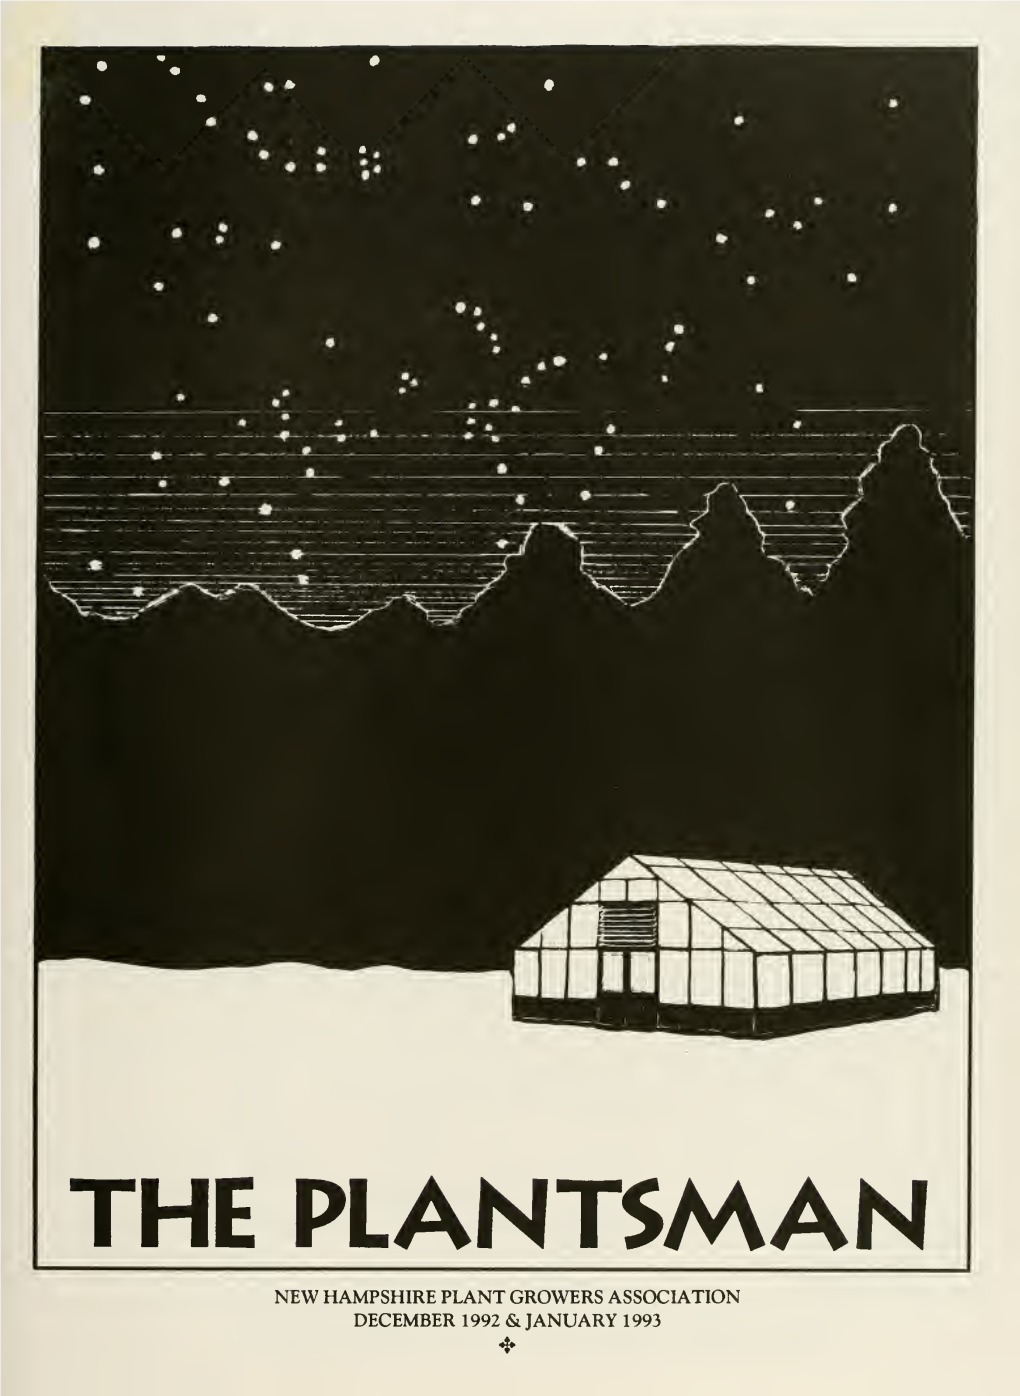 The Plantsman New Hampshire Plant Growers Association December 1992 & January 1993